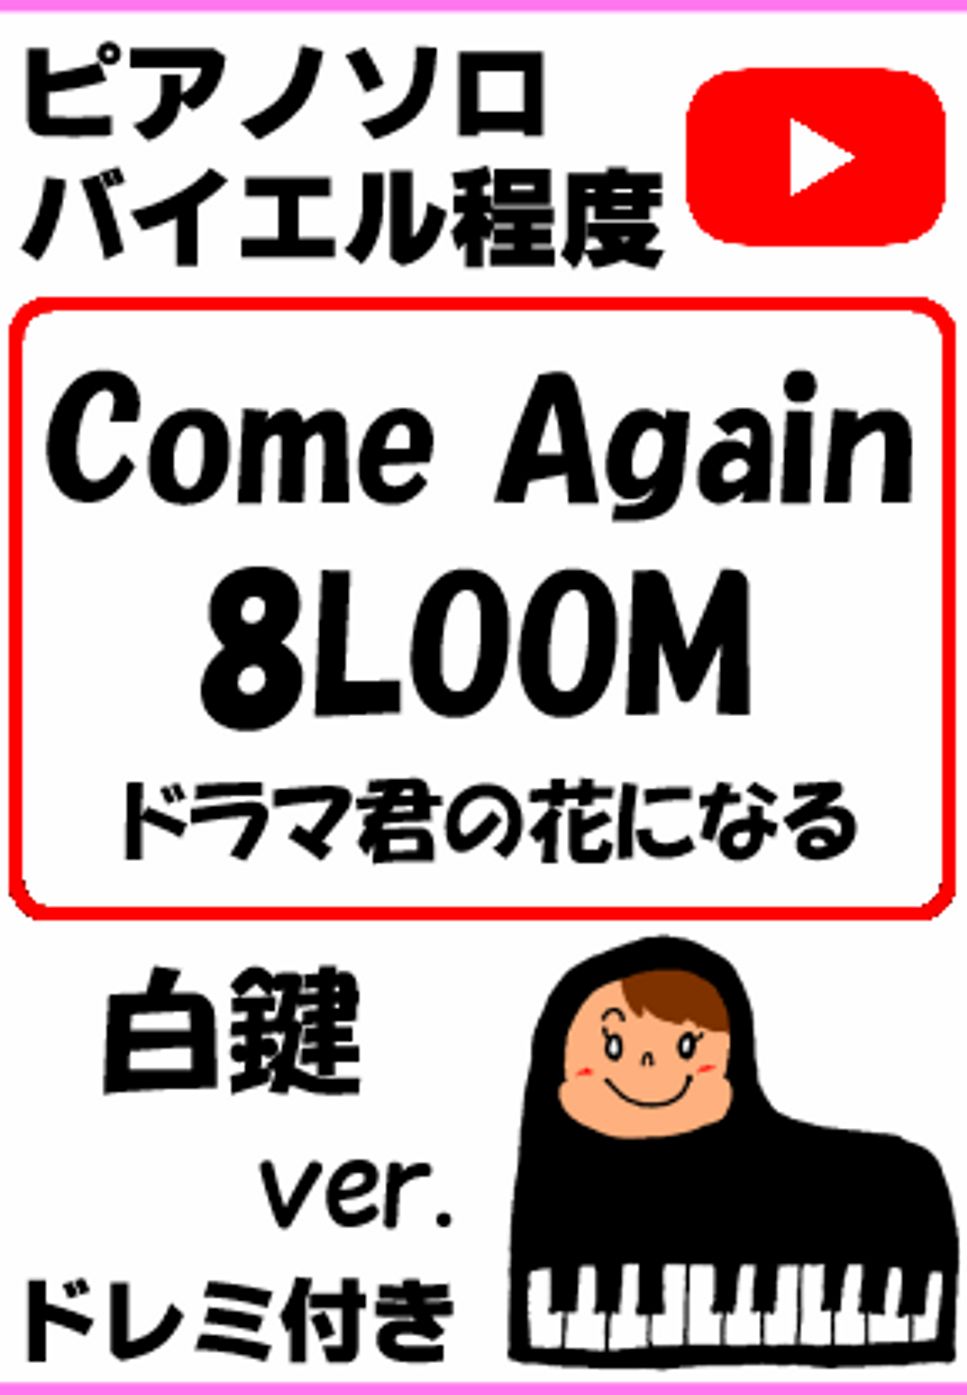 IE-MON - ｢Come Again」8LOOM TBS系火曜ドラマ『君の花になる』白鍵ver. (親子連弾/連弾/簡単ピアノ/白鍵ピアノ/演奏会/ドレミ付/楽譜/鍵盤/piano) by ラボのピアノ